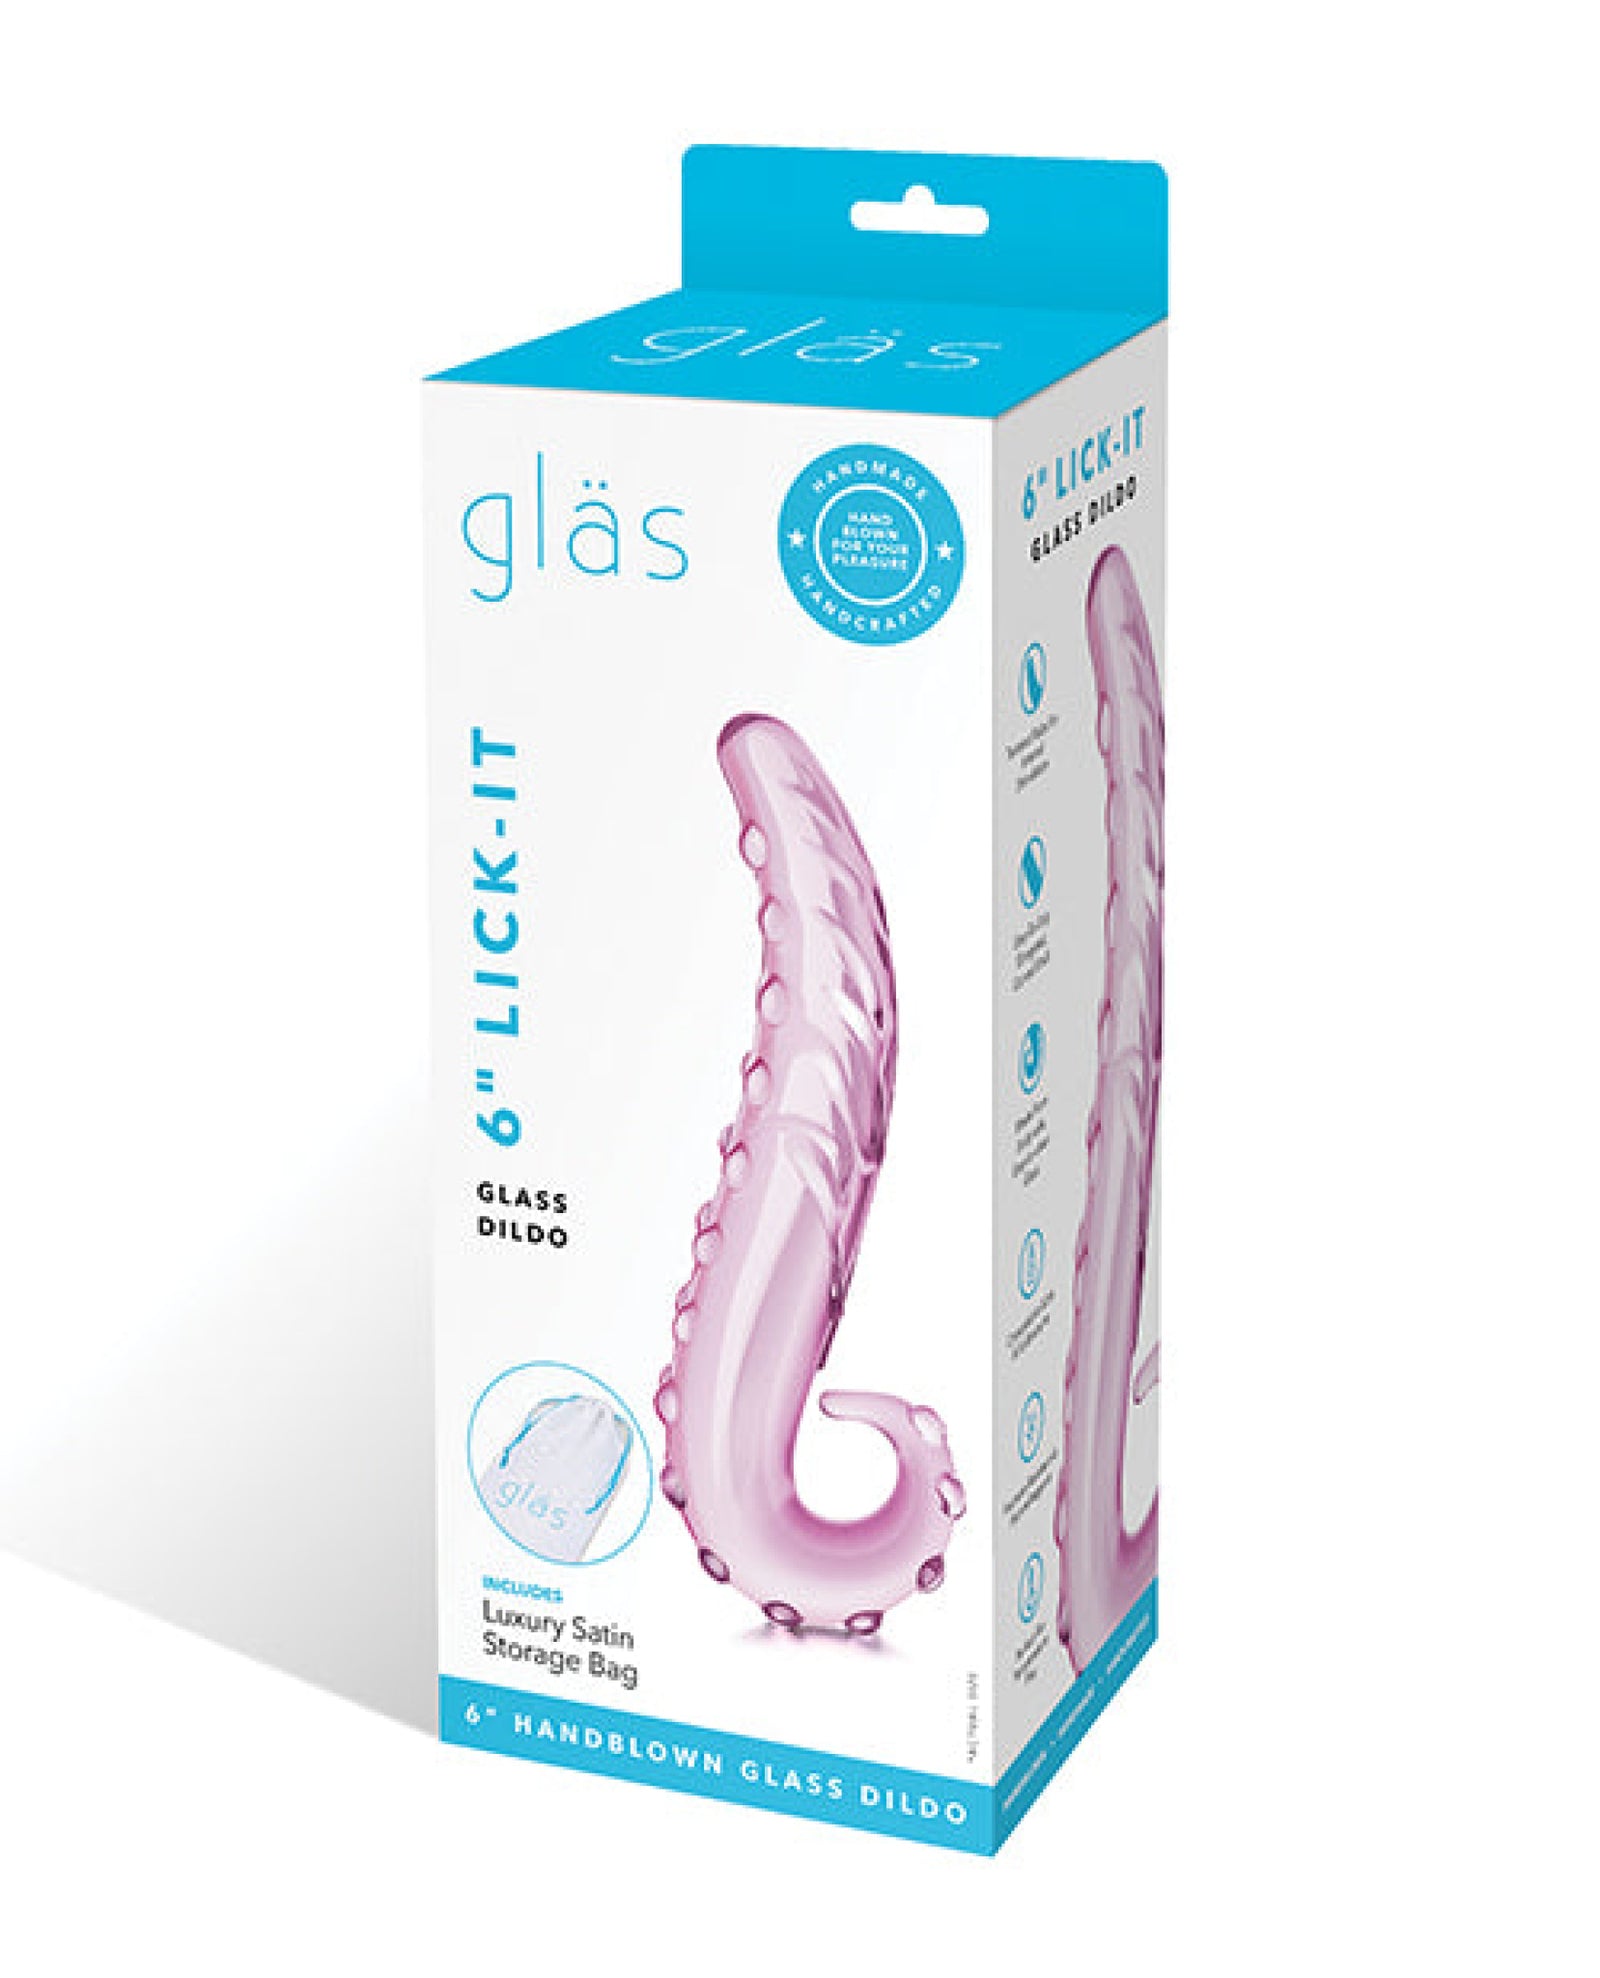 Glas 6" Lick-it Glass Dildo - Pink Gläs